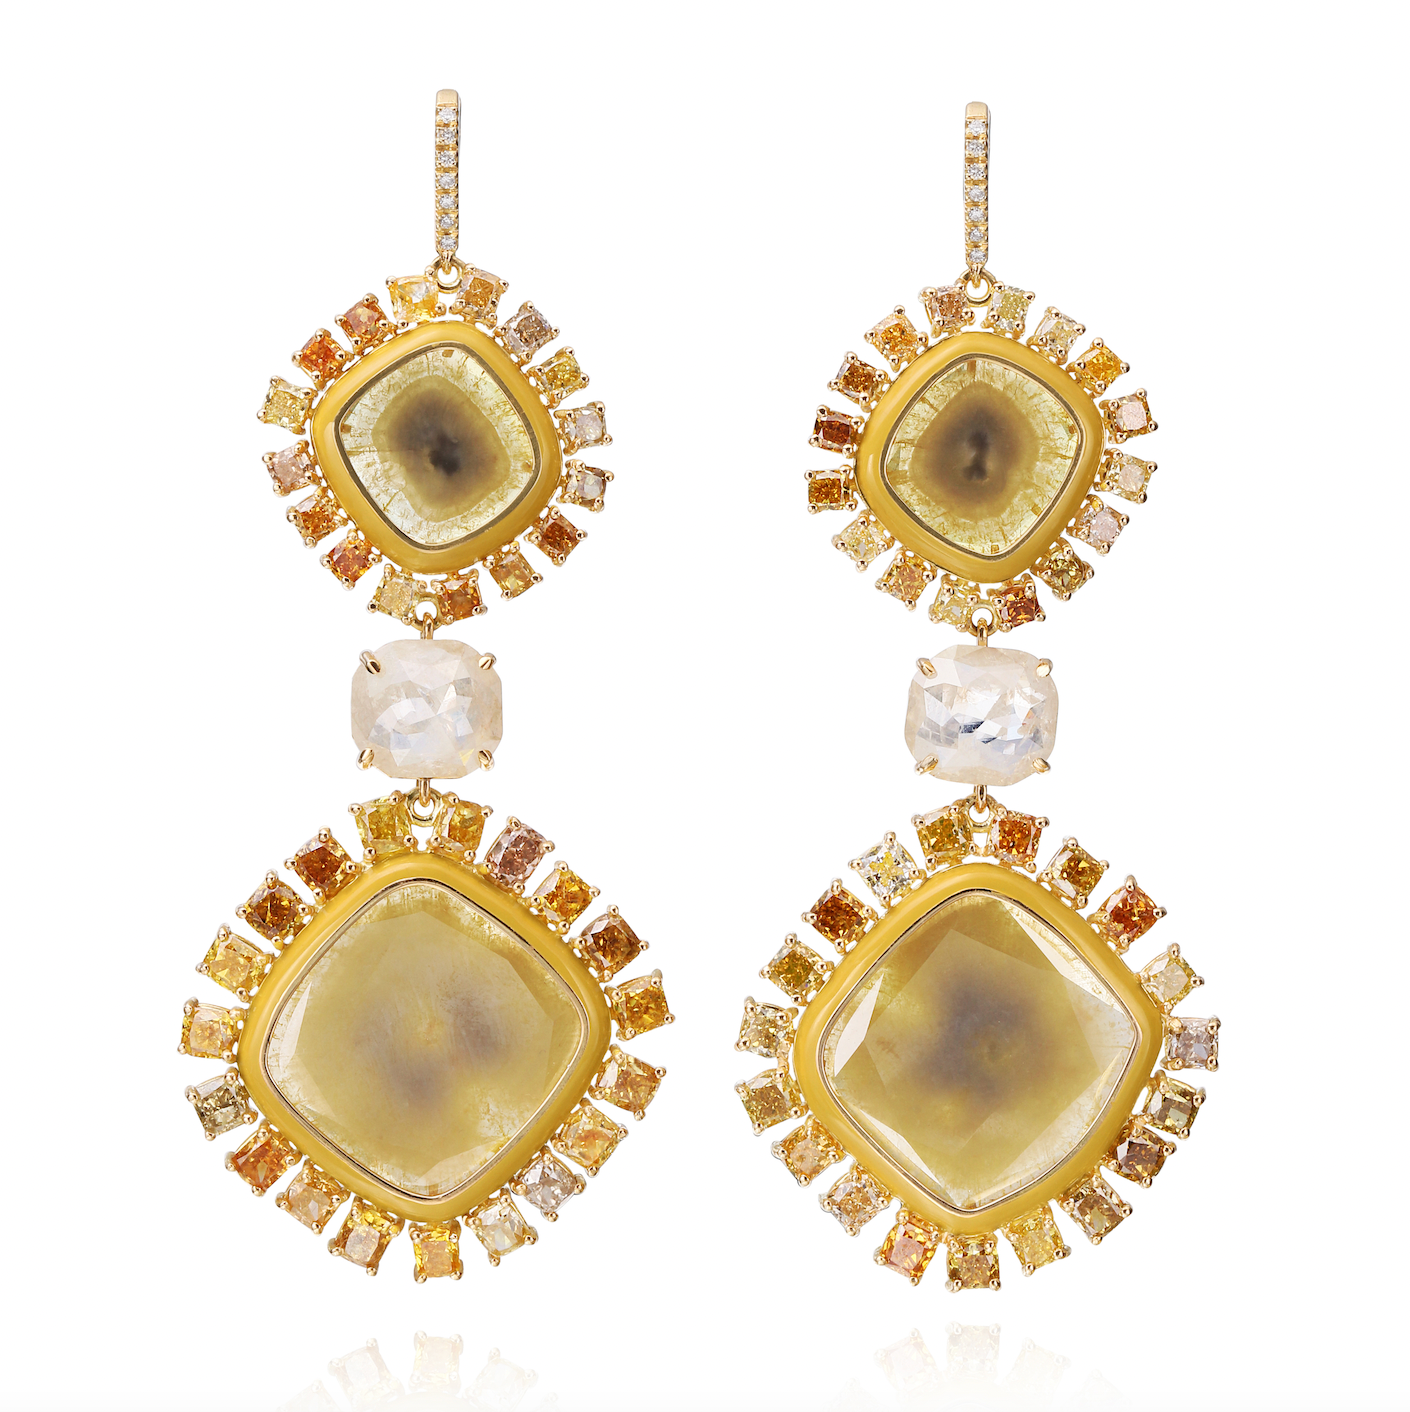 18K Yellow Gold 8.13ct and 2.64ct Yellow Slice Diamond with 13.41ct Fancy Diamond Earrings